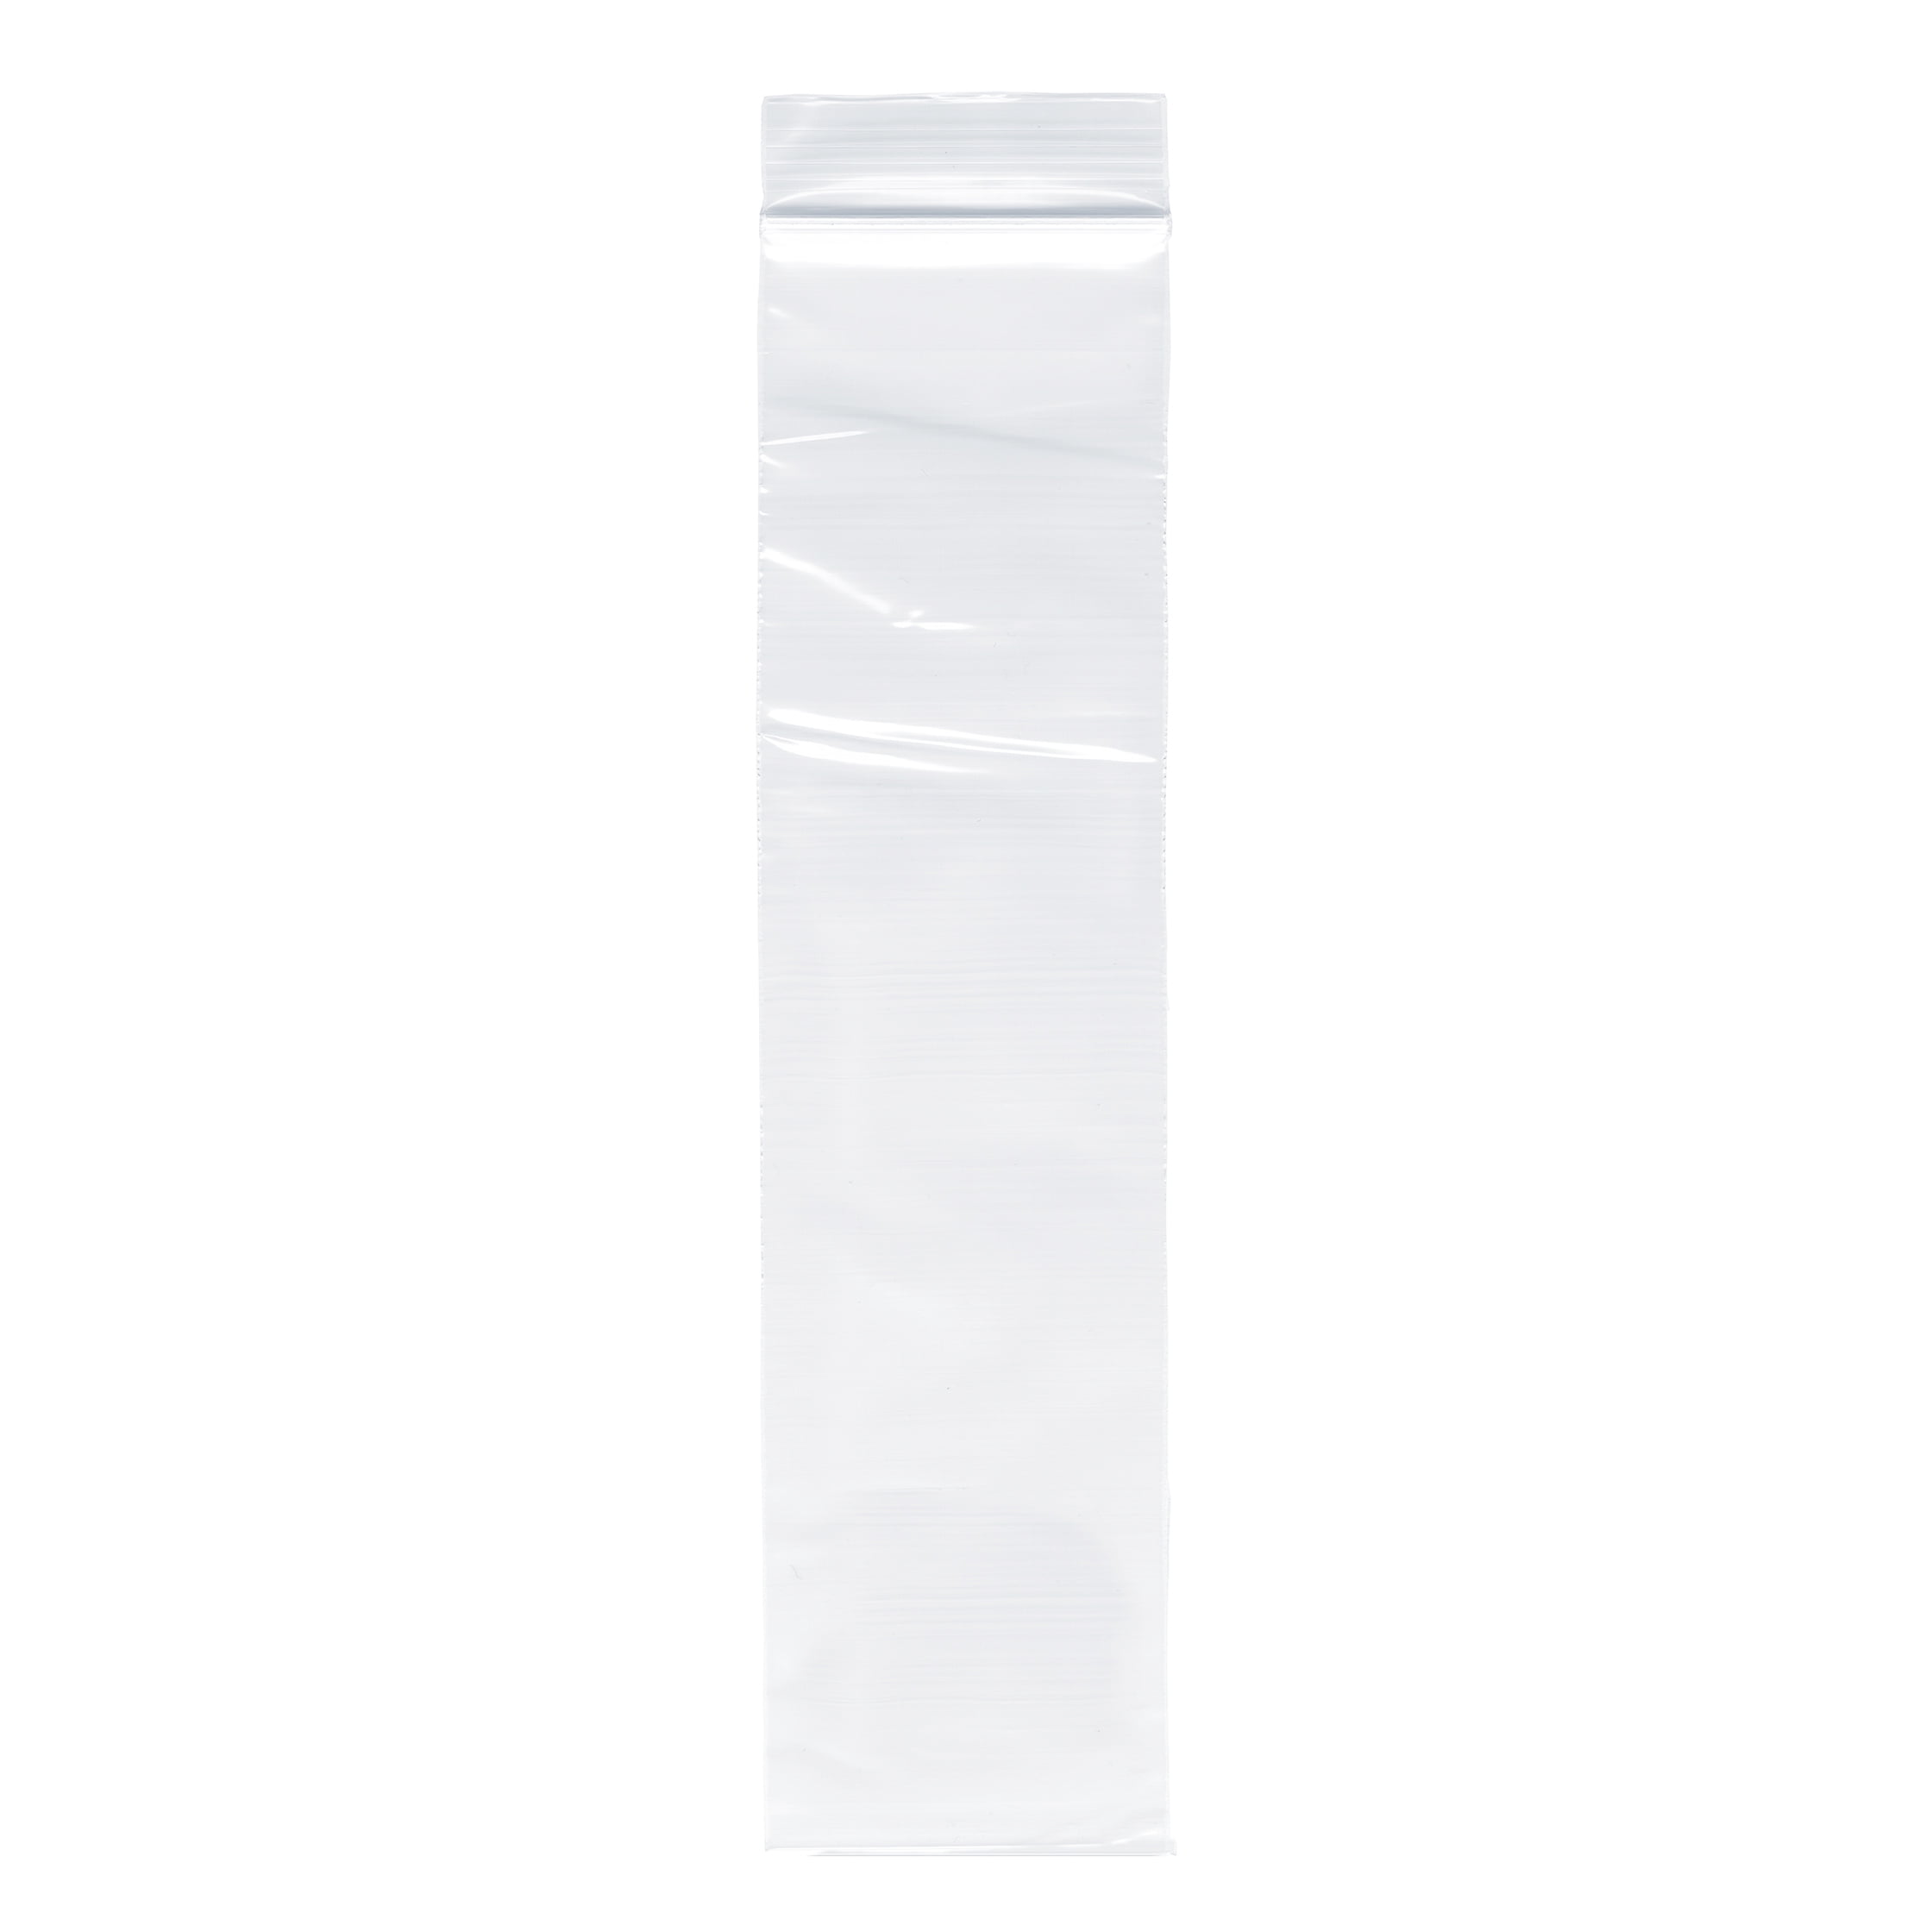 Plymor Zipper Reclosable Plastic Bags, 2 Mil, 2.5 x 3.5 (Case of